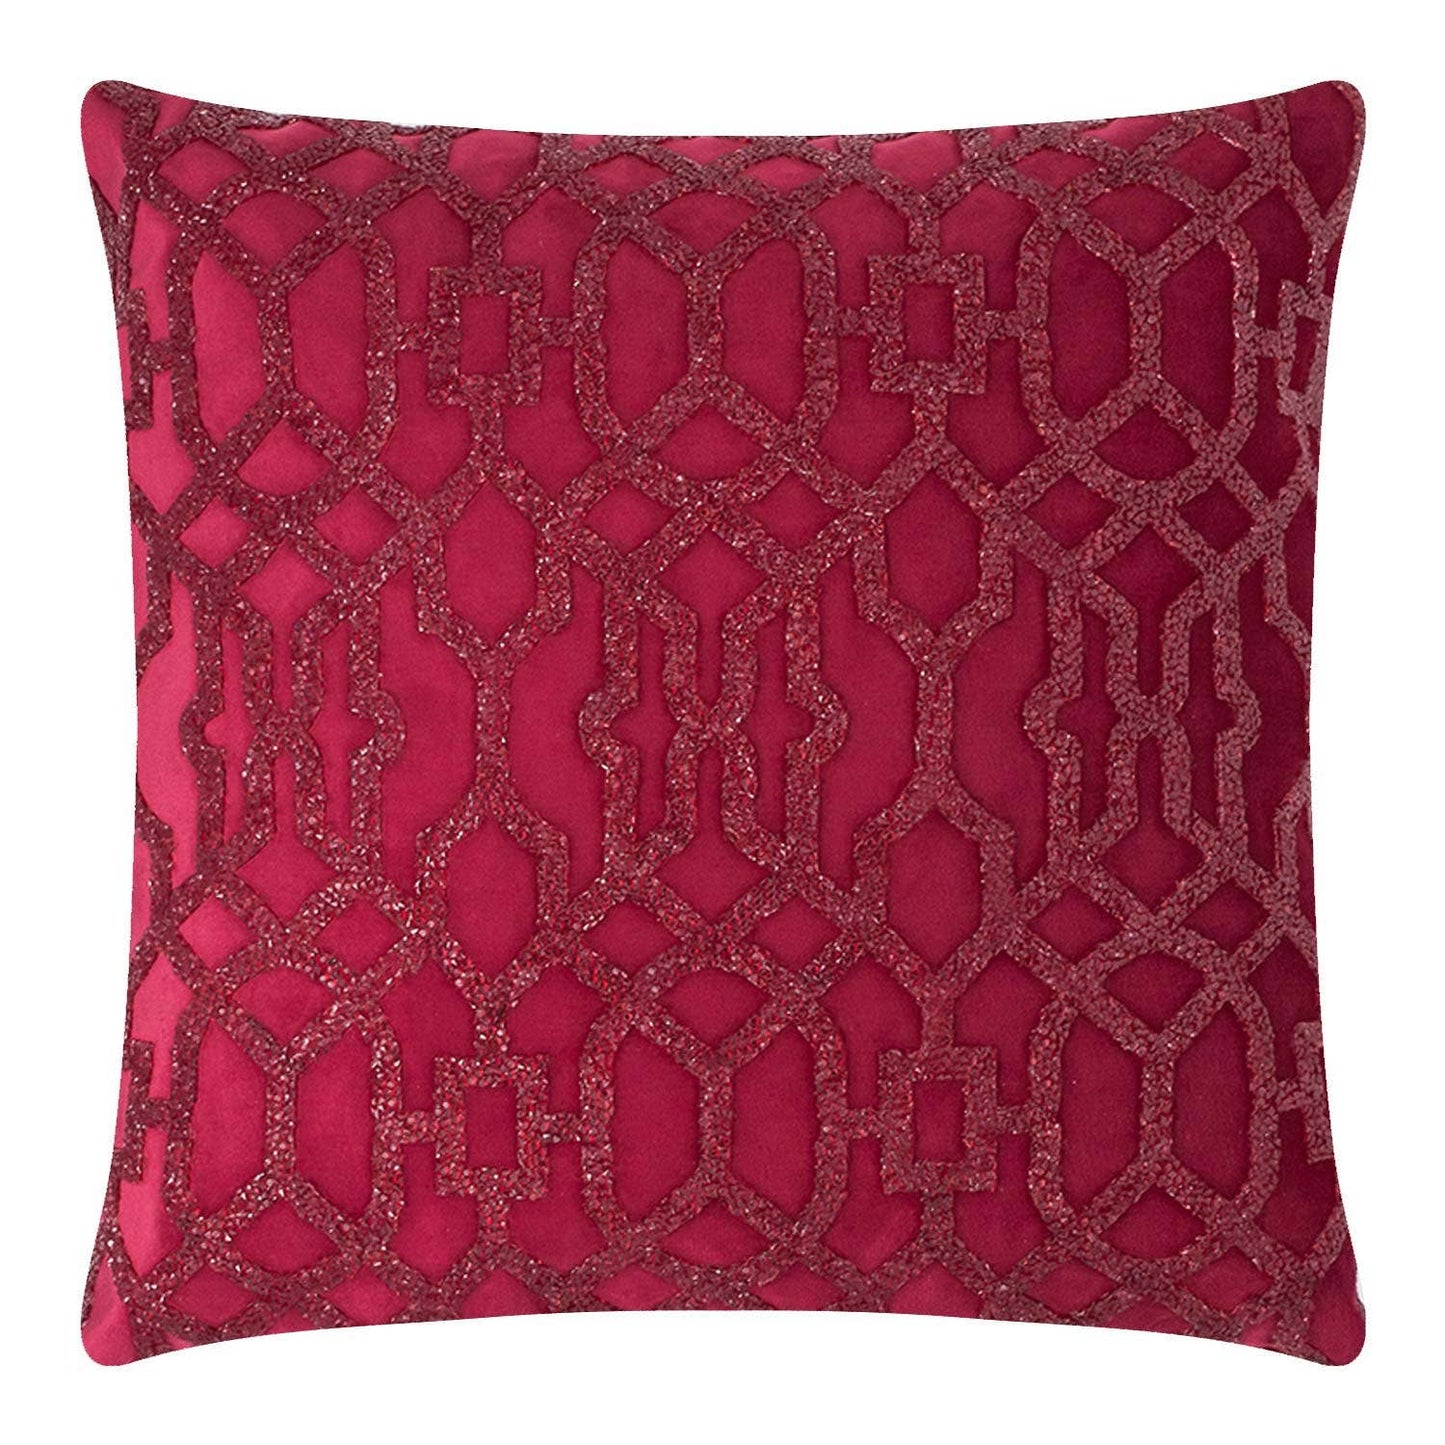 Rhinestone Lattice Pillow: 20x20 / Charcoal